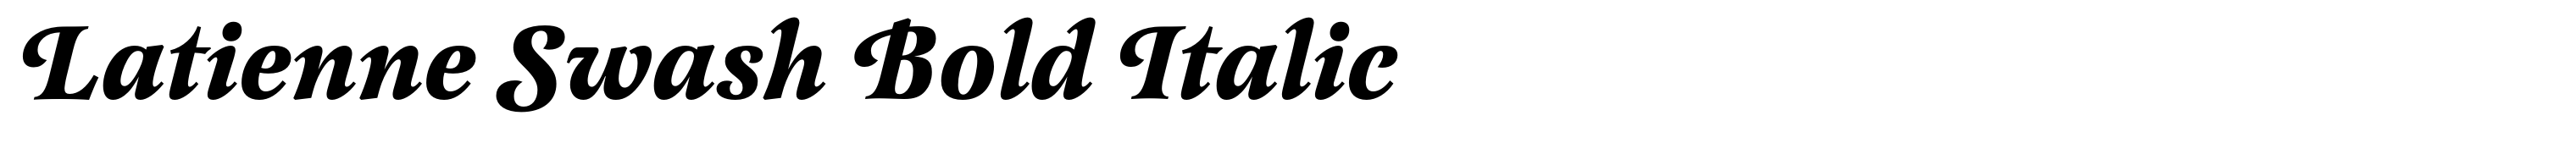 Latienne Swash Bold Italic